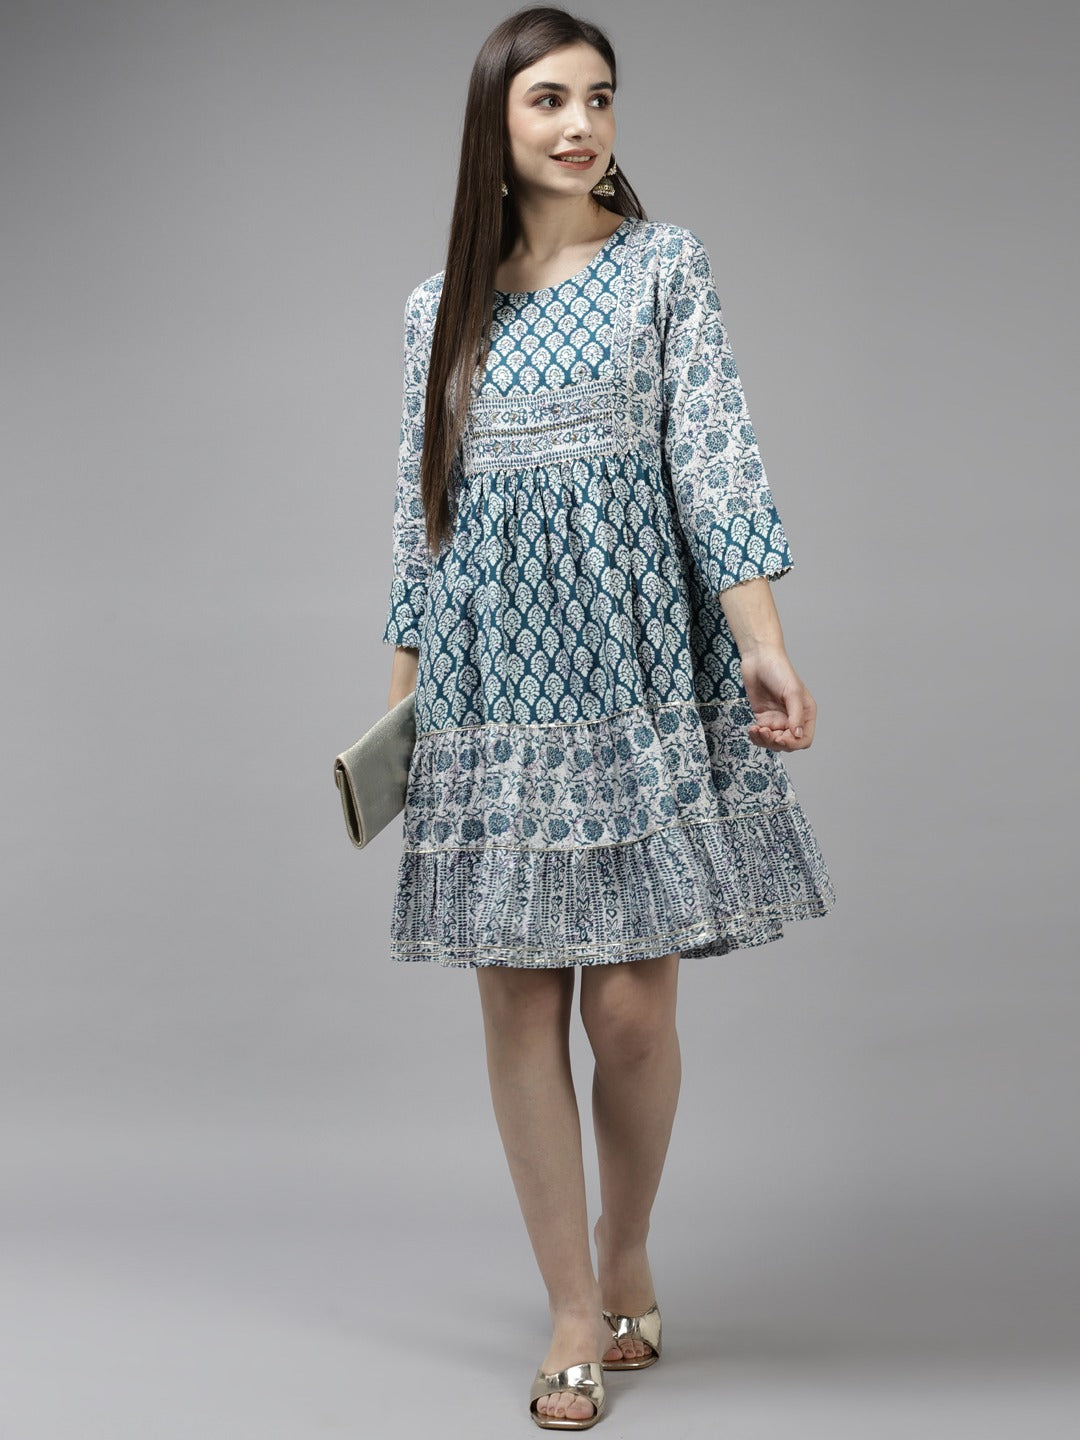 White Ethnic Dress-Yufta Store-9871DRSWHS